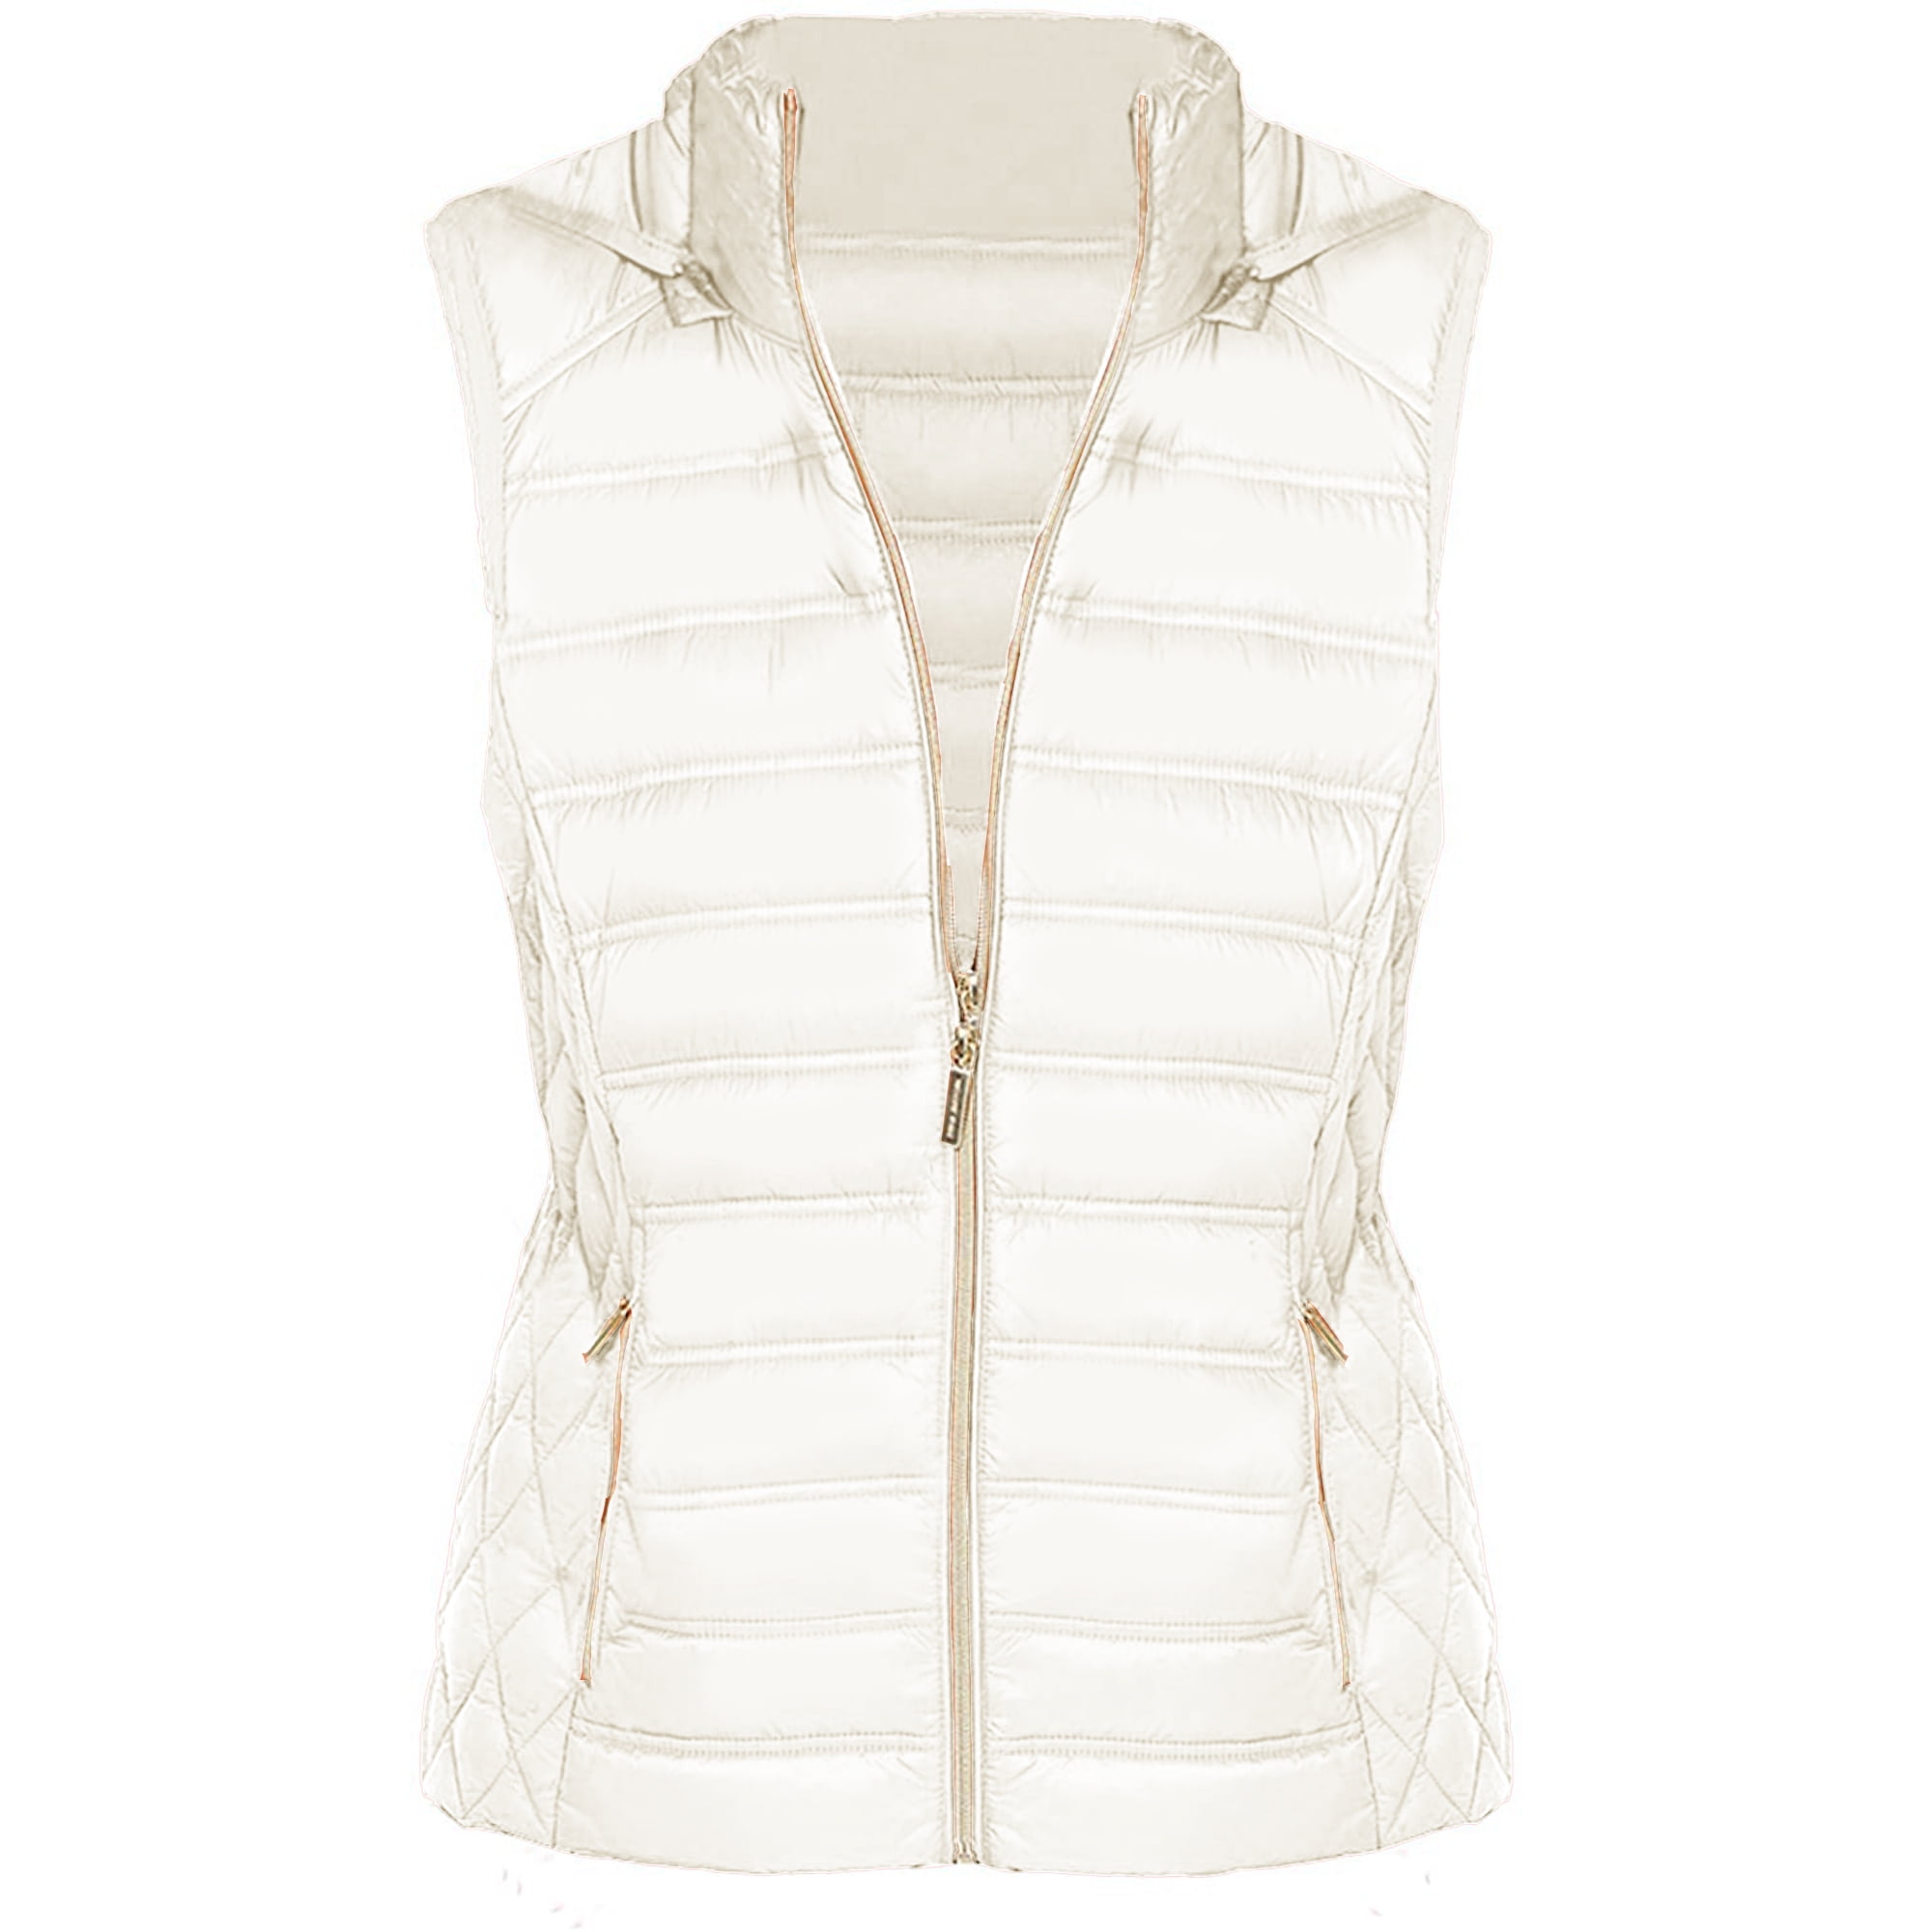 MICHAEL Michael Kors Designer going out tops & vests for women, Buy online